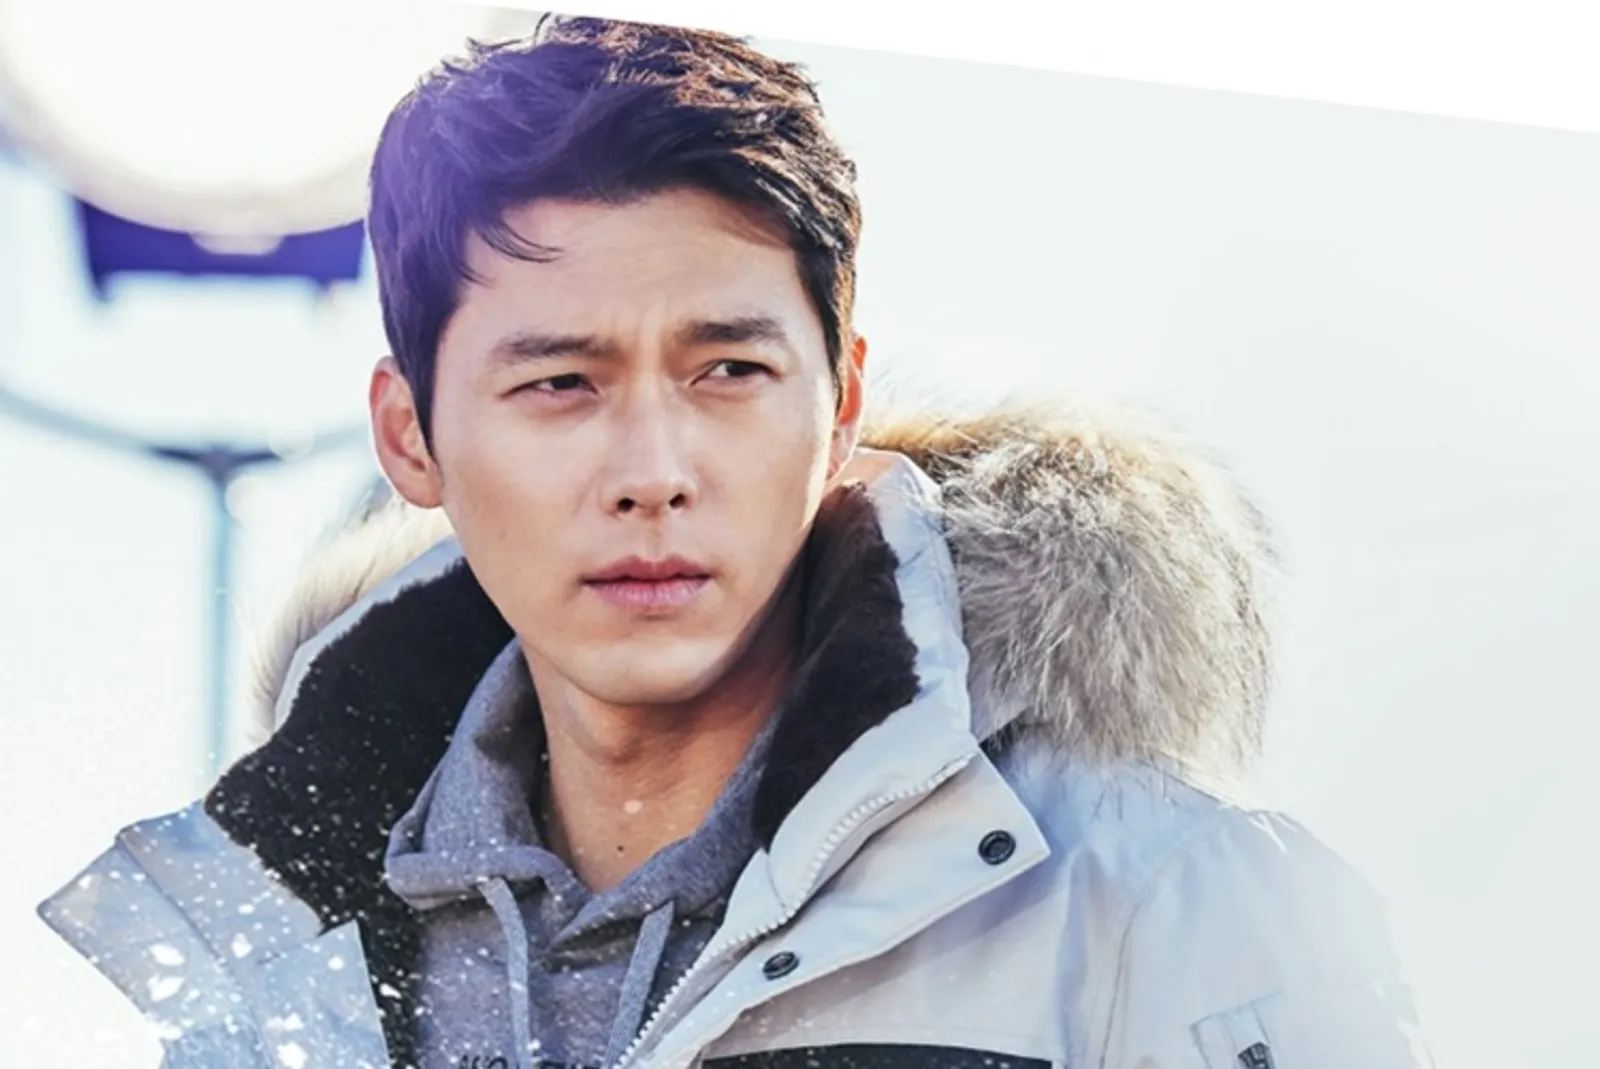 Masih Single, 9 Aktor Korea Ini Blak-blakan Soal Tipe Cewek Idamannya